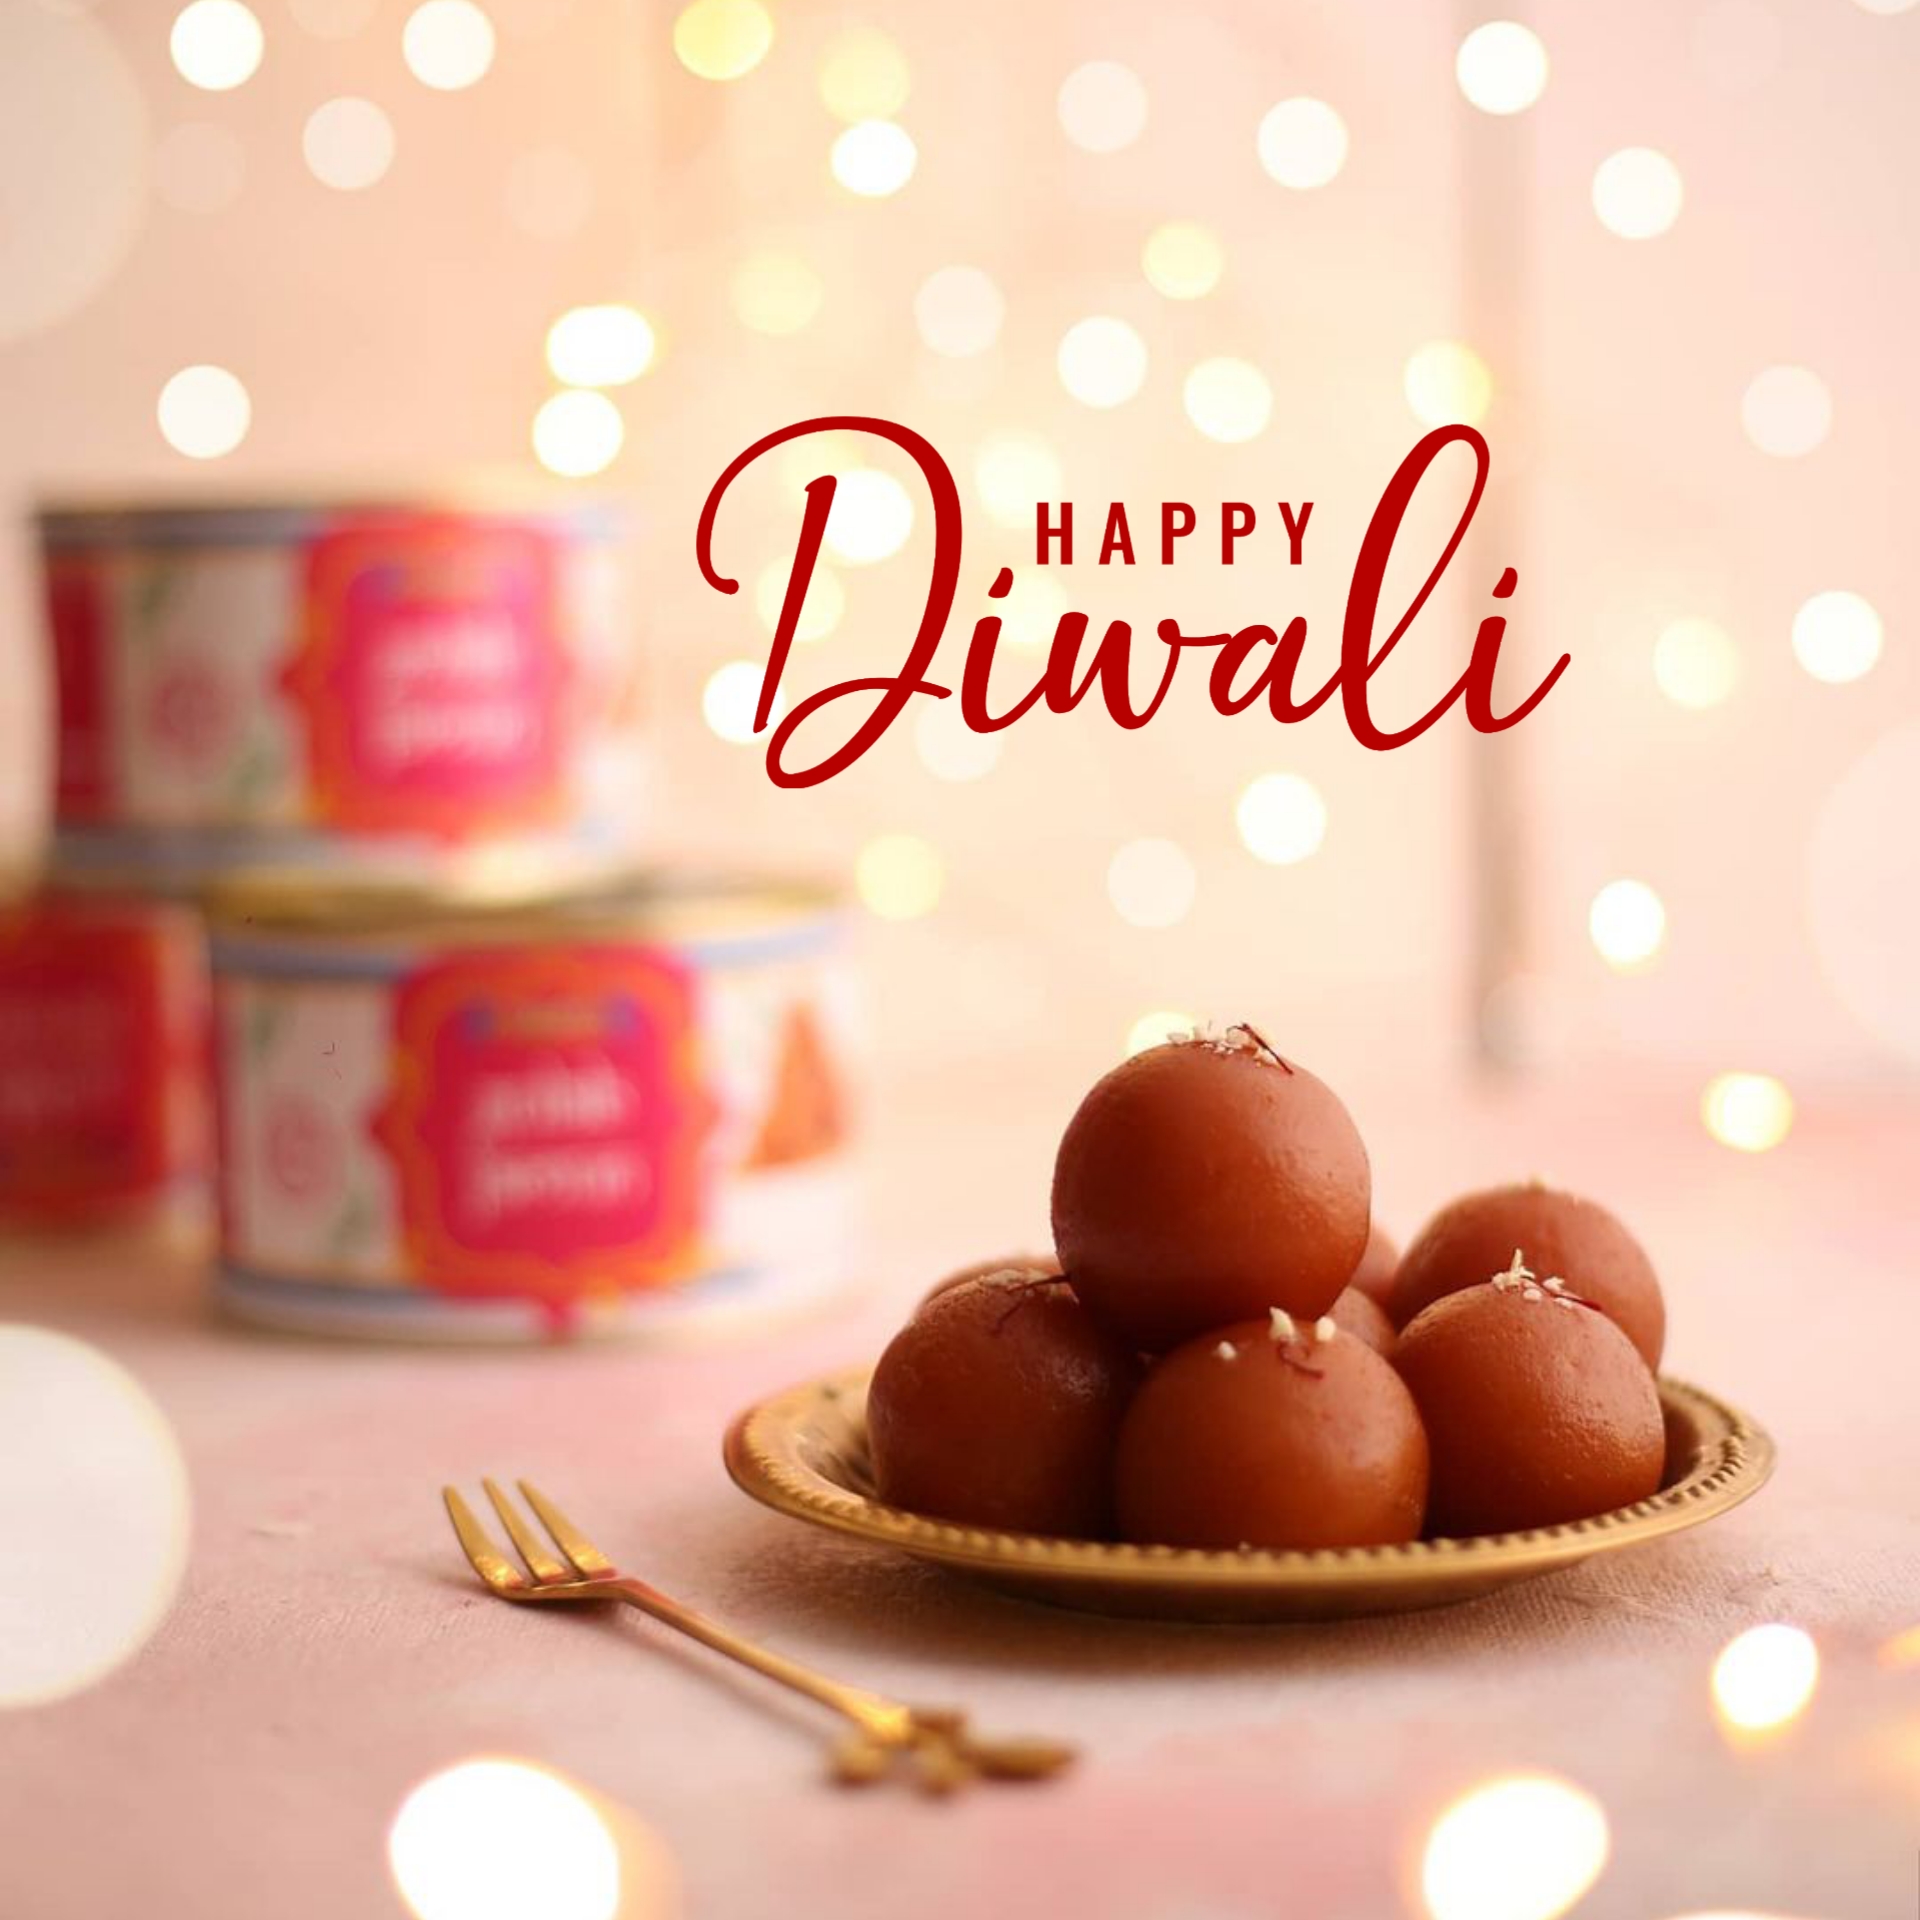 Sweet Happy Diwali Images